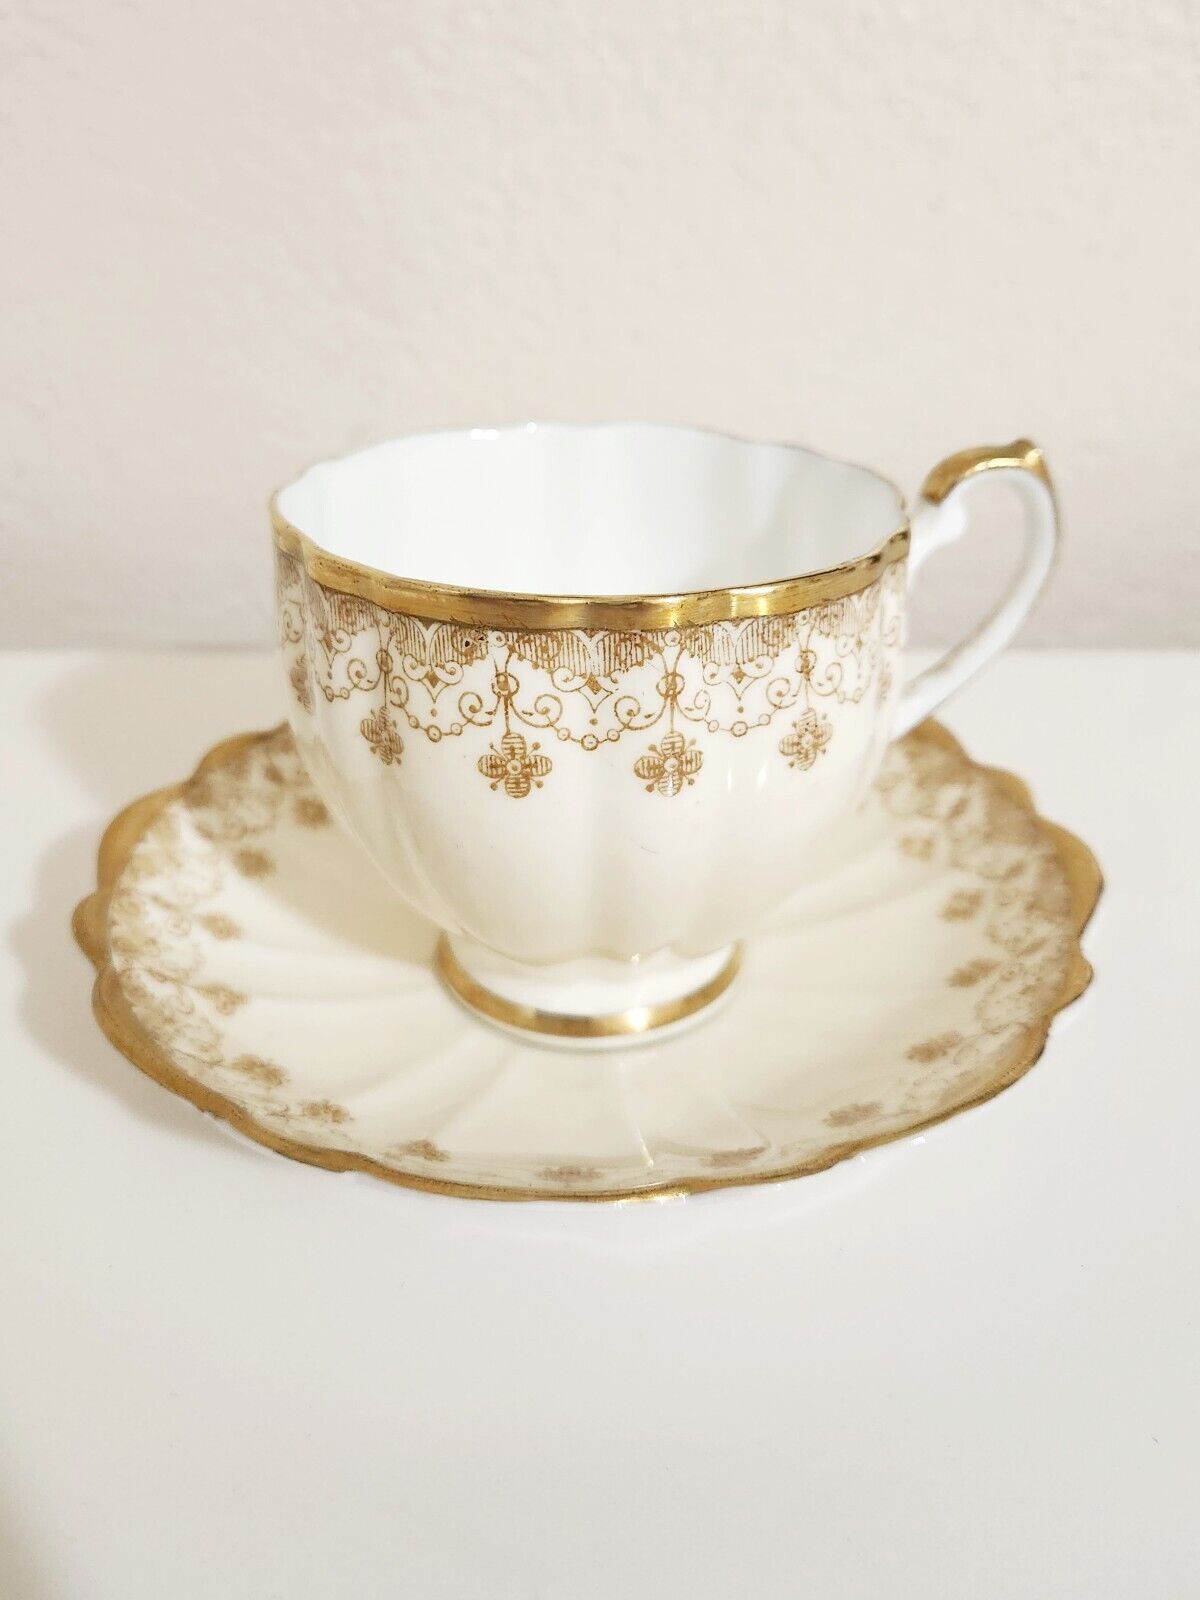 Victoria C&E Bone China Collectible Antique Vintage Scalloped Tea Cup & Saucer